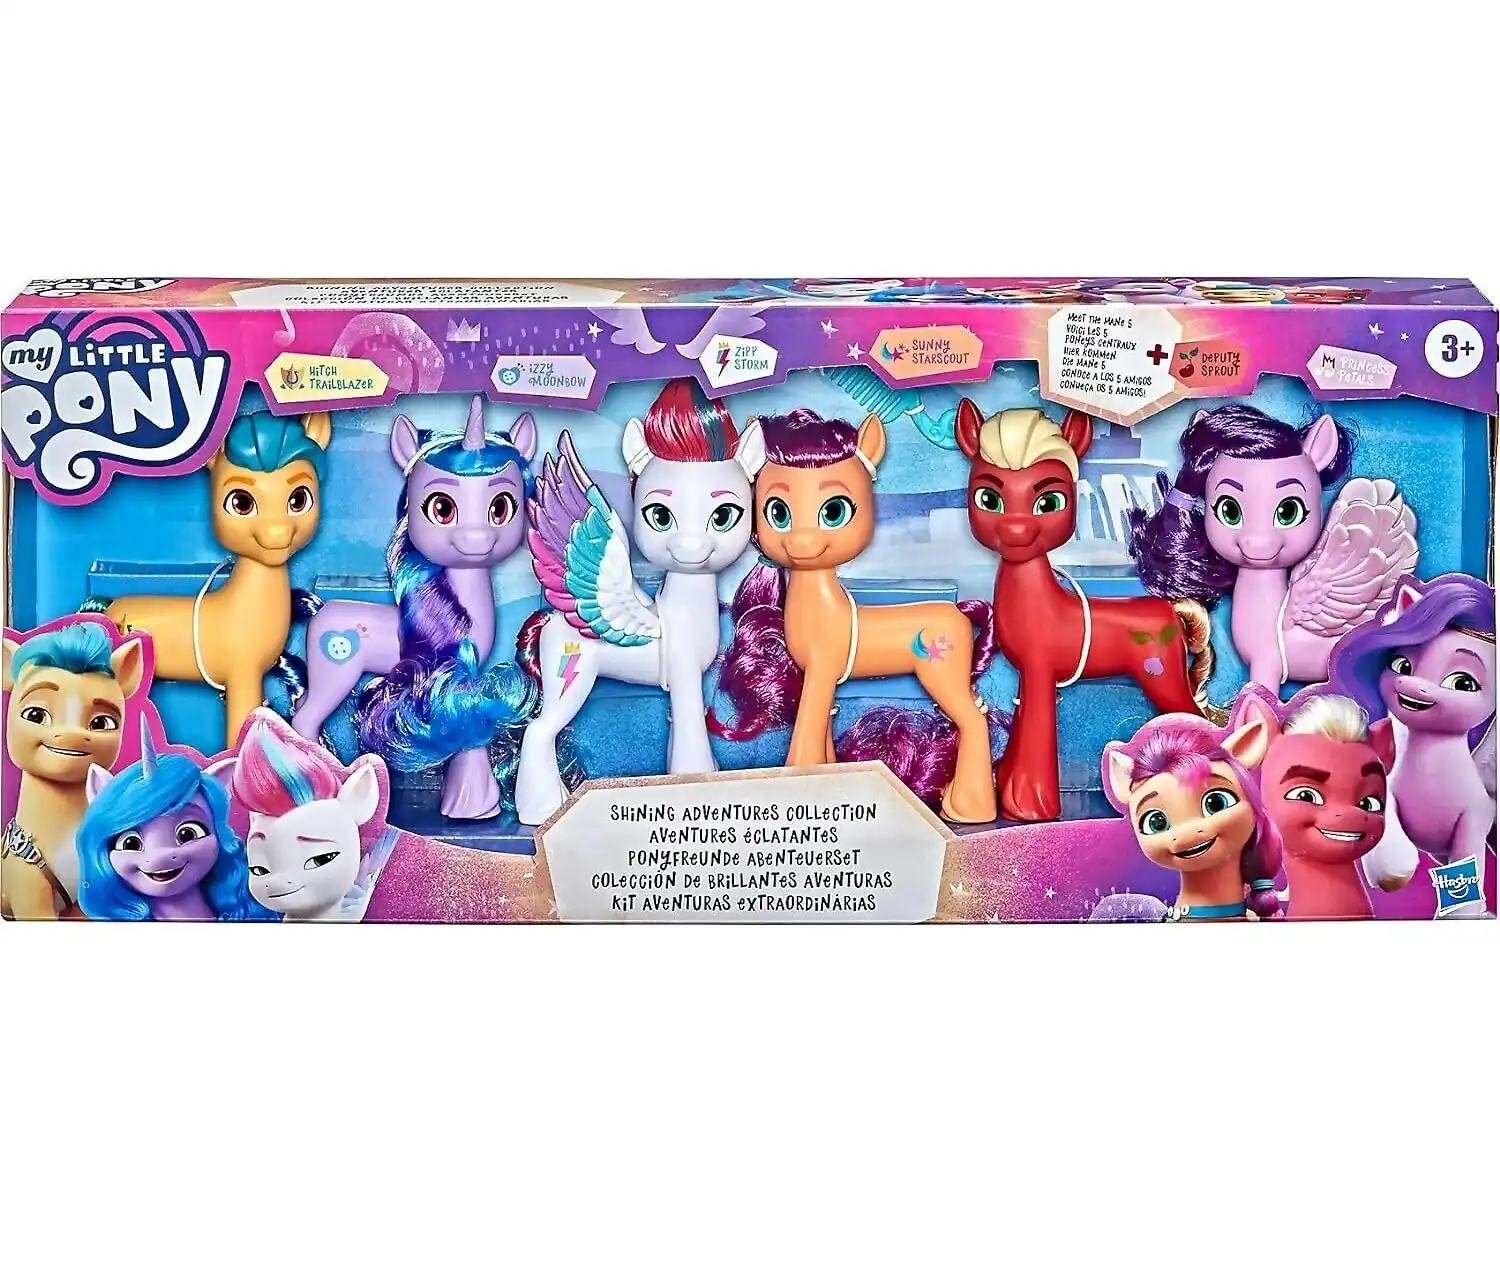 My Little Pony - Movie Shining Adventure Collection - Hasbro